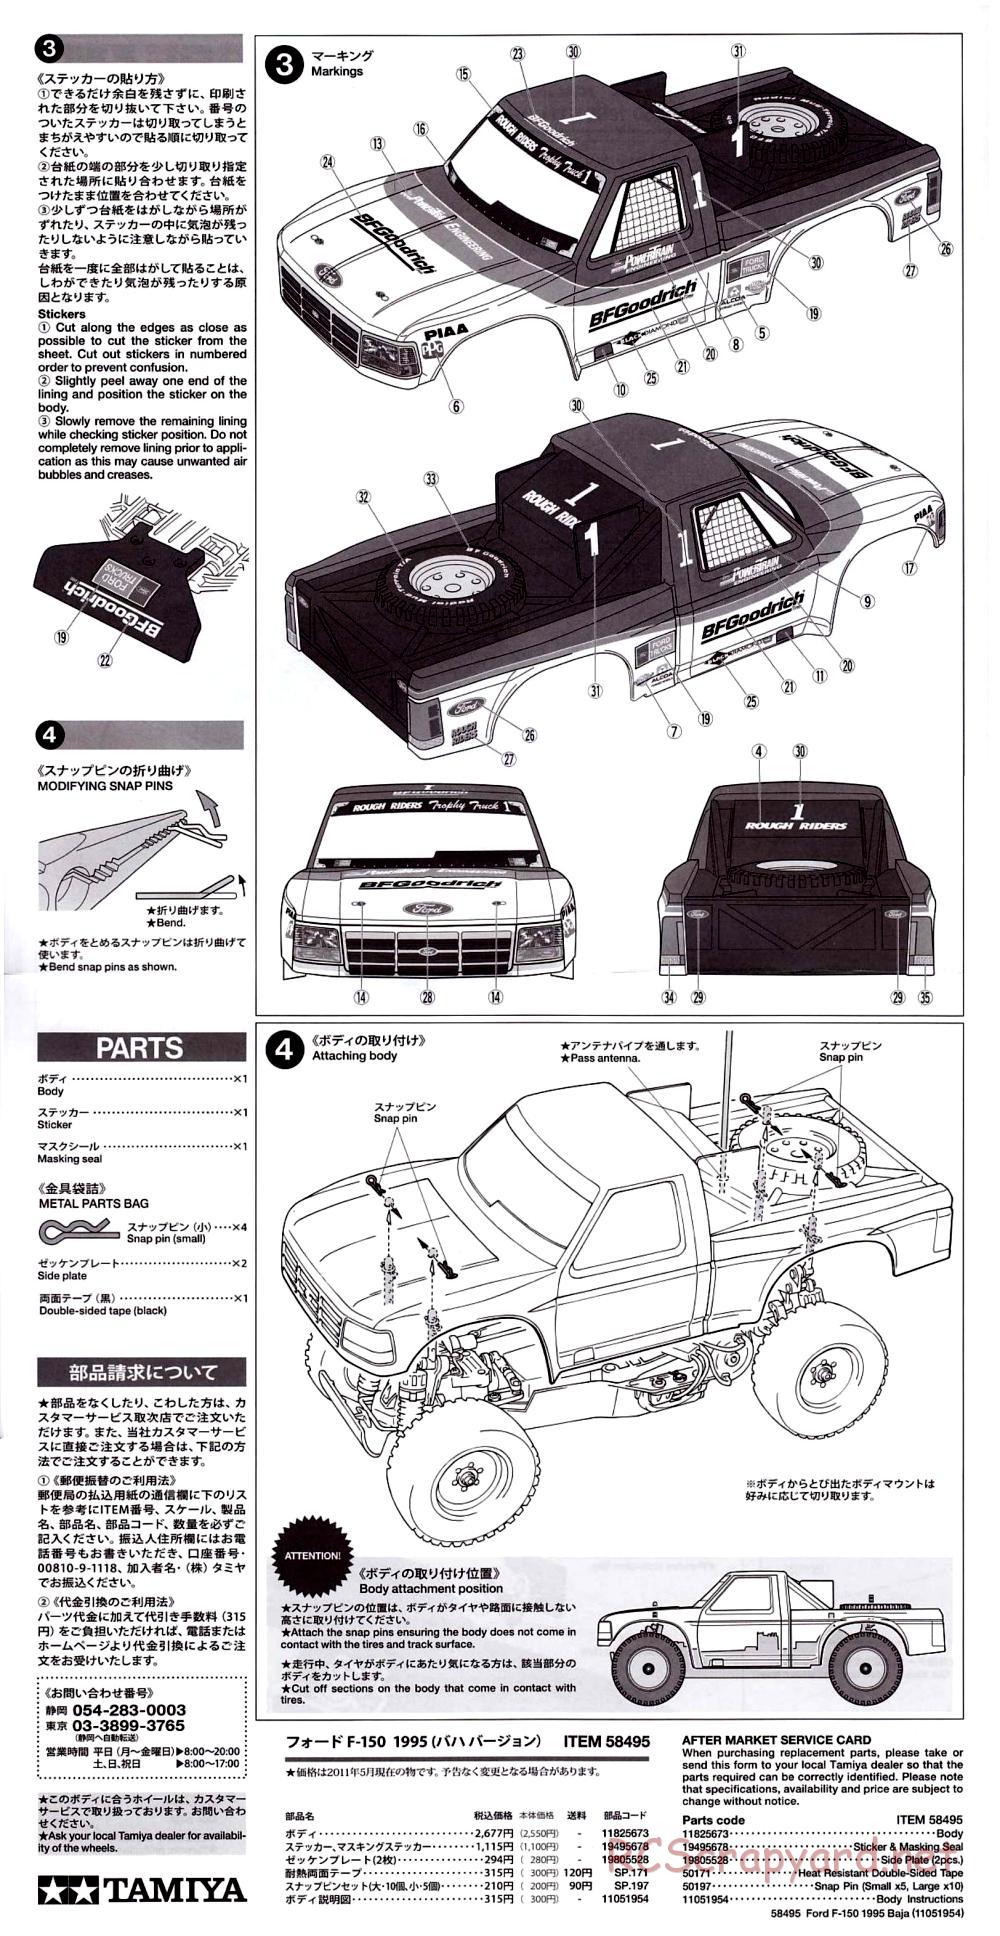 Tamiya - Ford F150 1995 Baja Version - TA-02T Chassis - Body Manual - Page 2